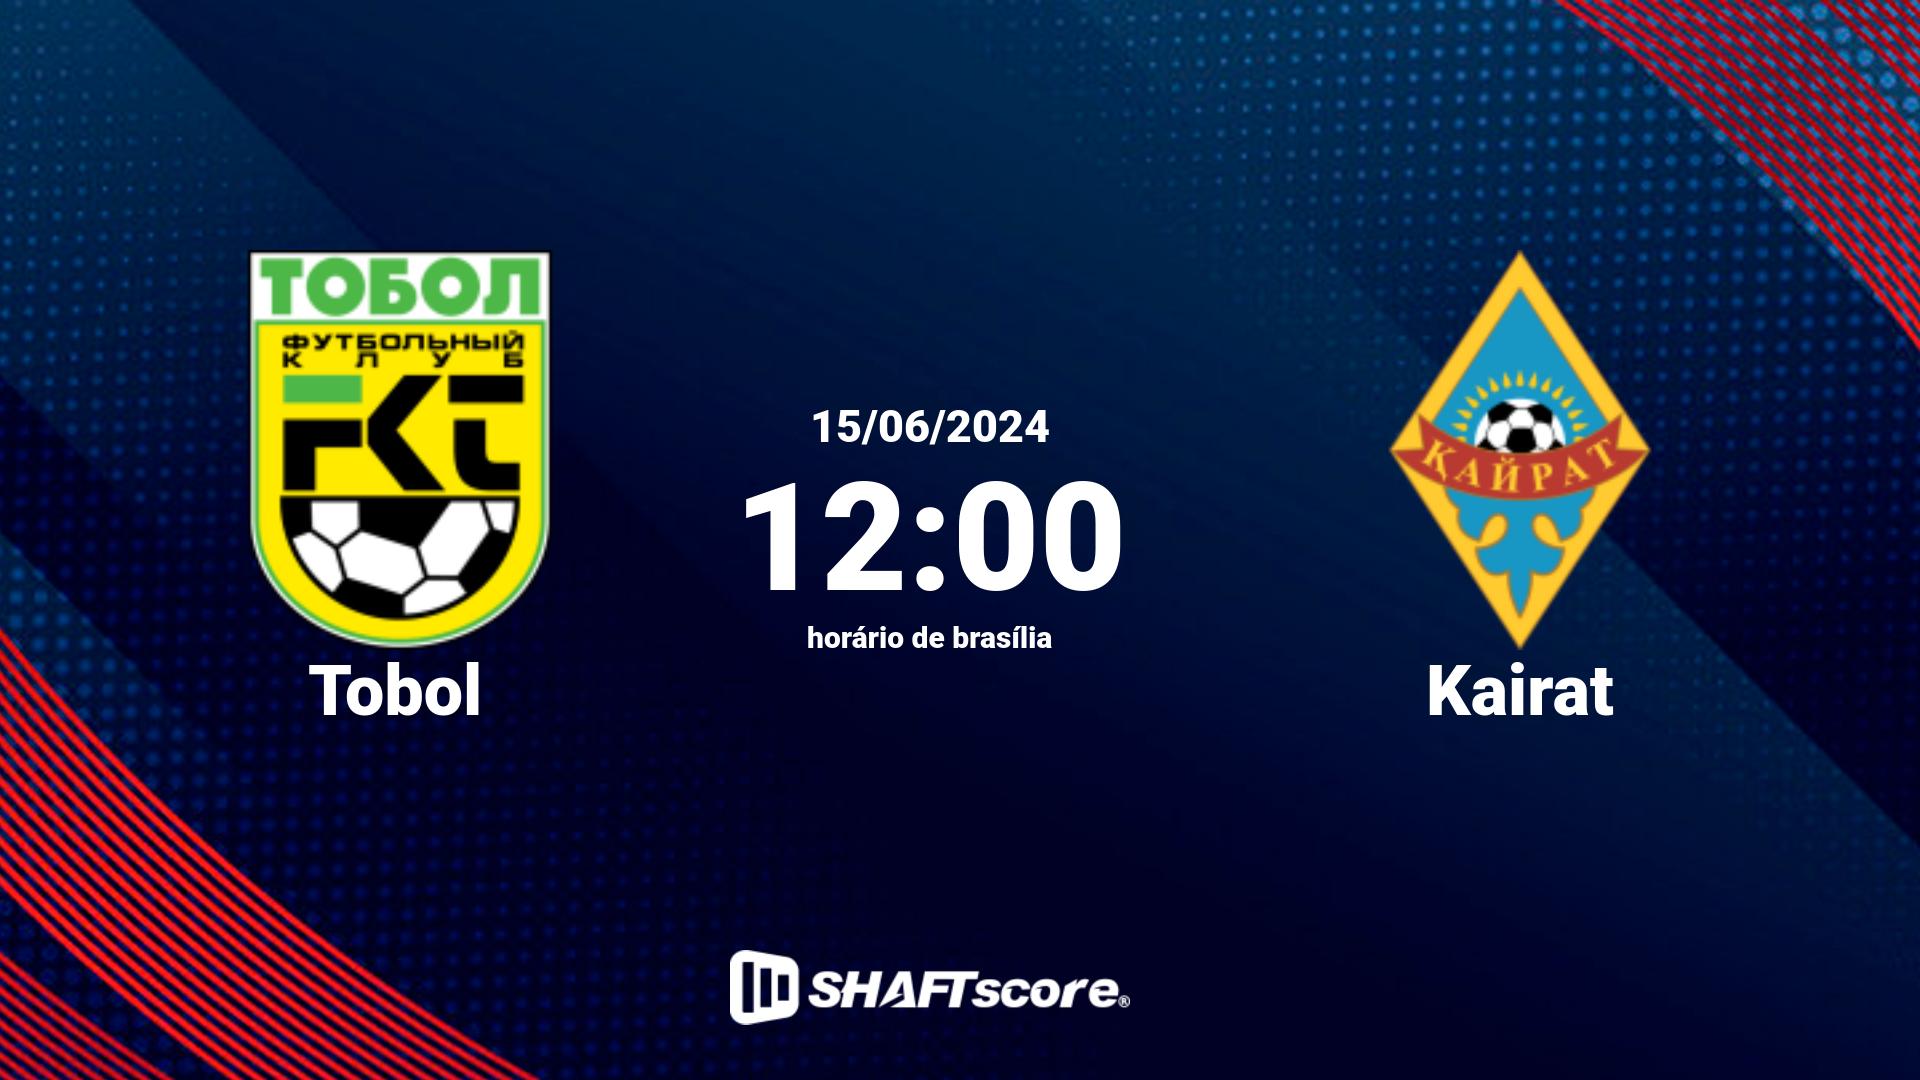 Estatísticas do jogo Tobol vs Kairat 15.06 12:00